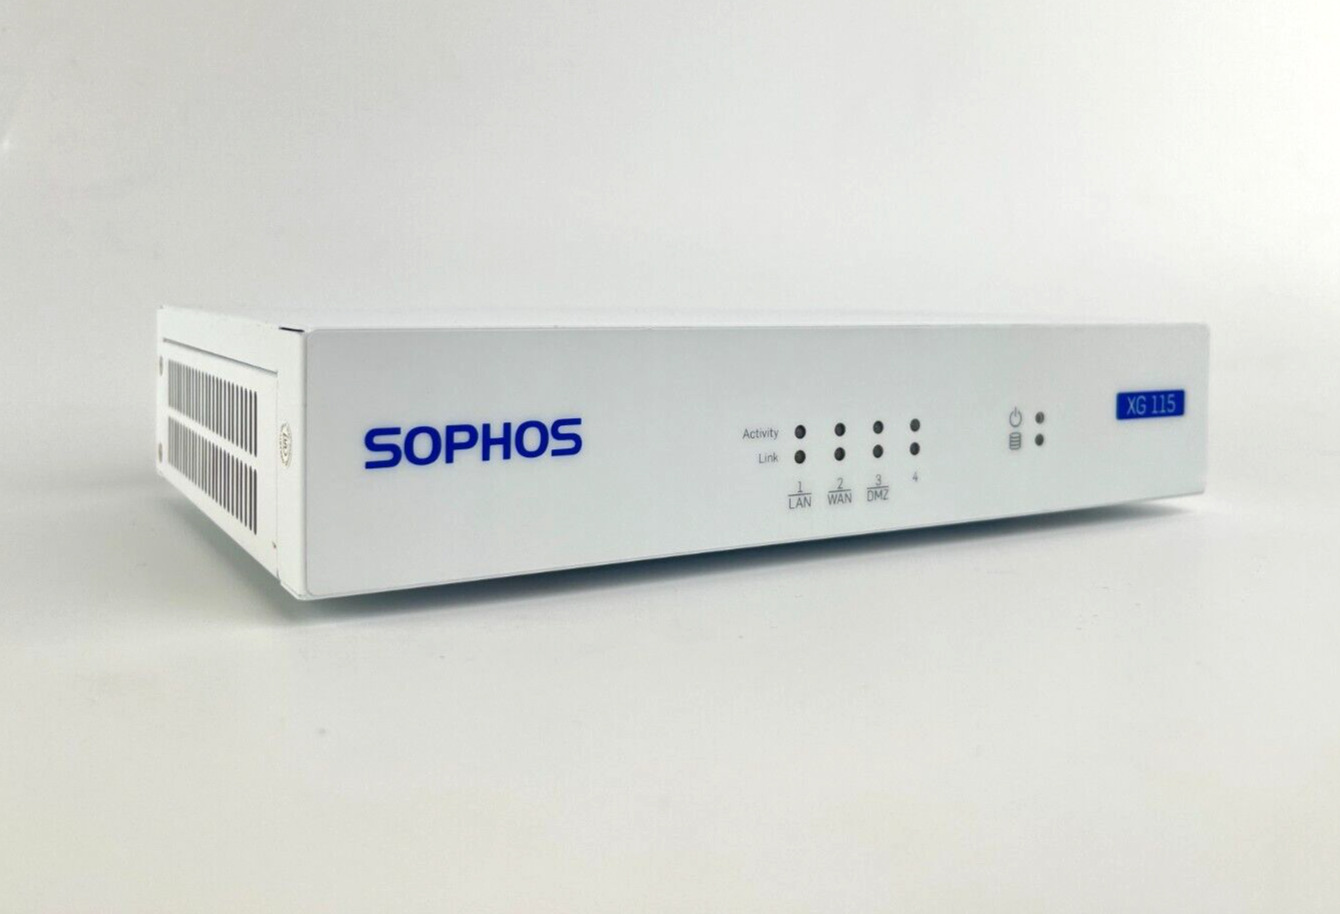 Sophos XG 115 Rev2 I Network Security Firewall Appliance I 4 Port w/Power supply